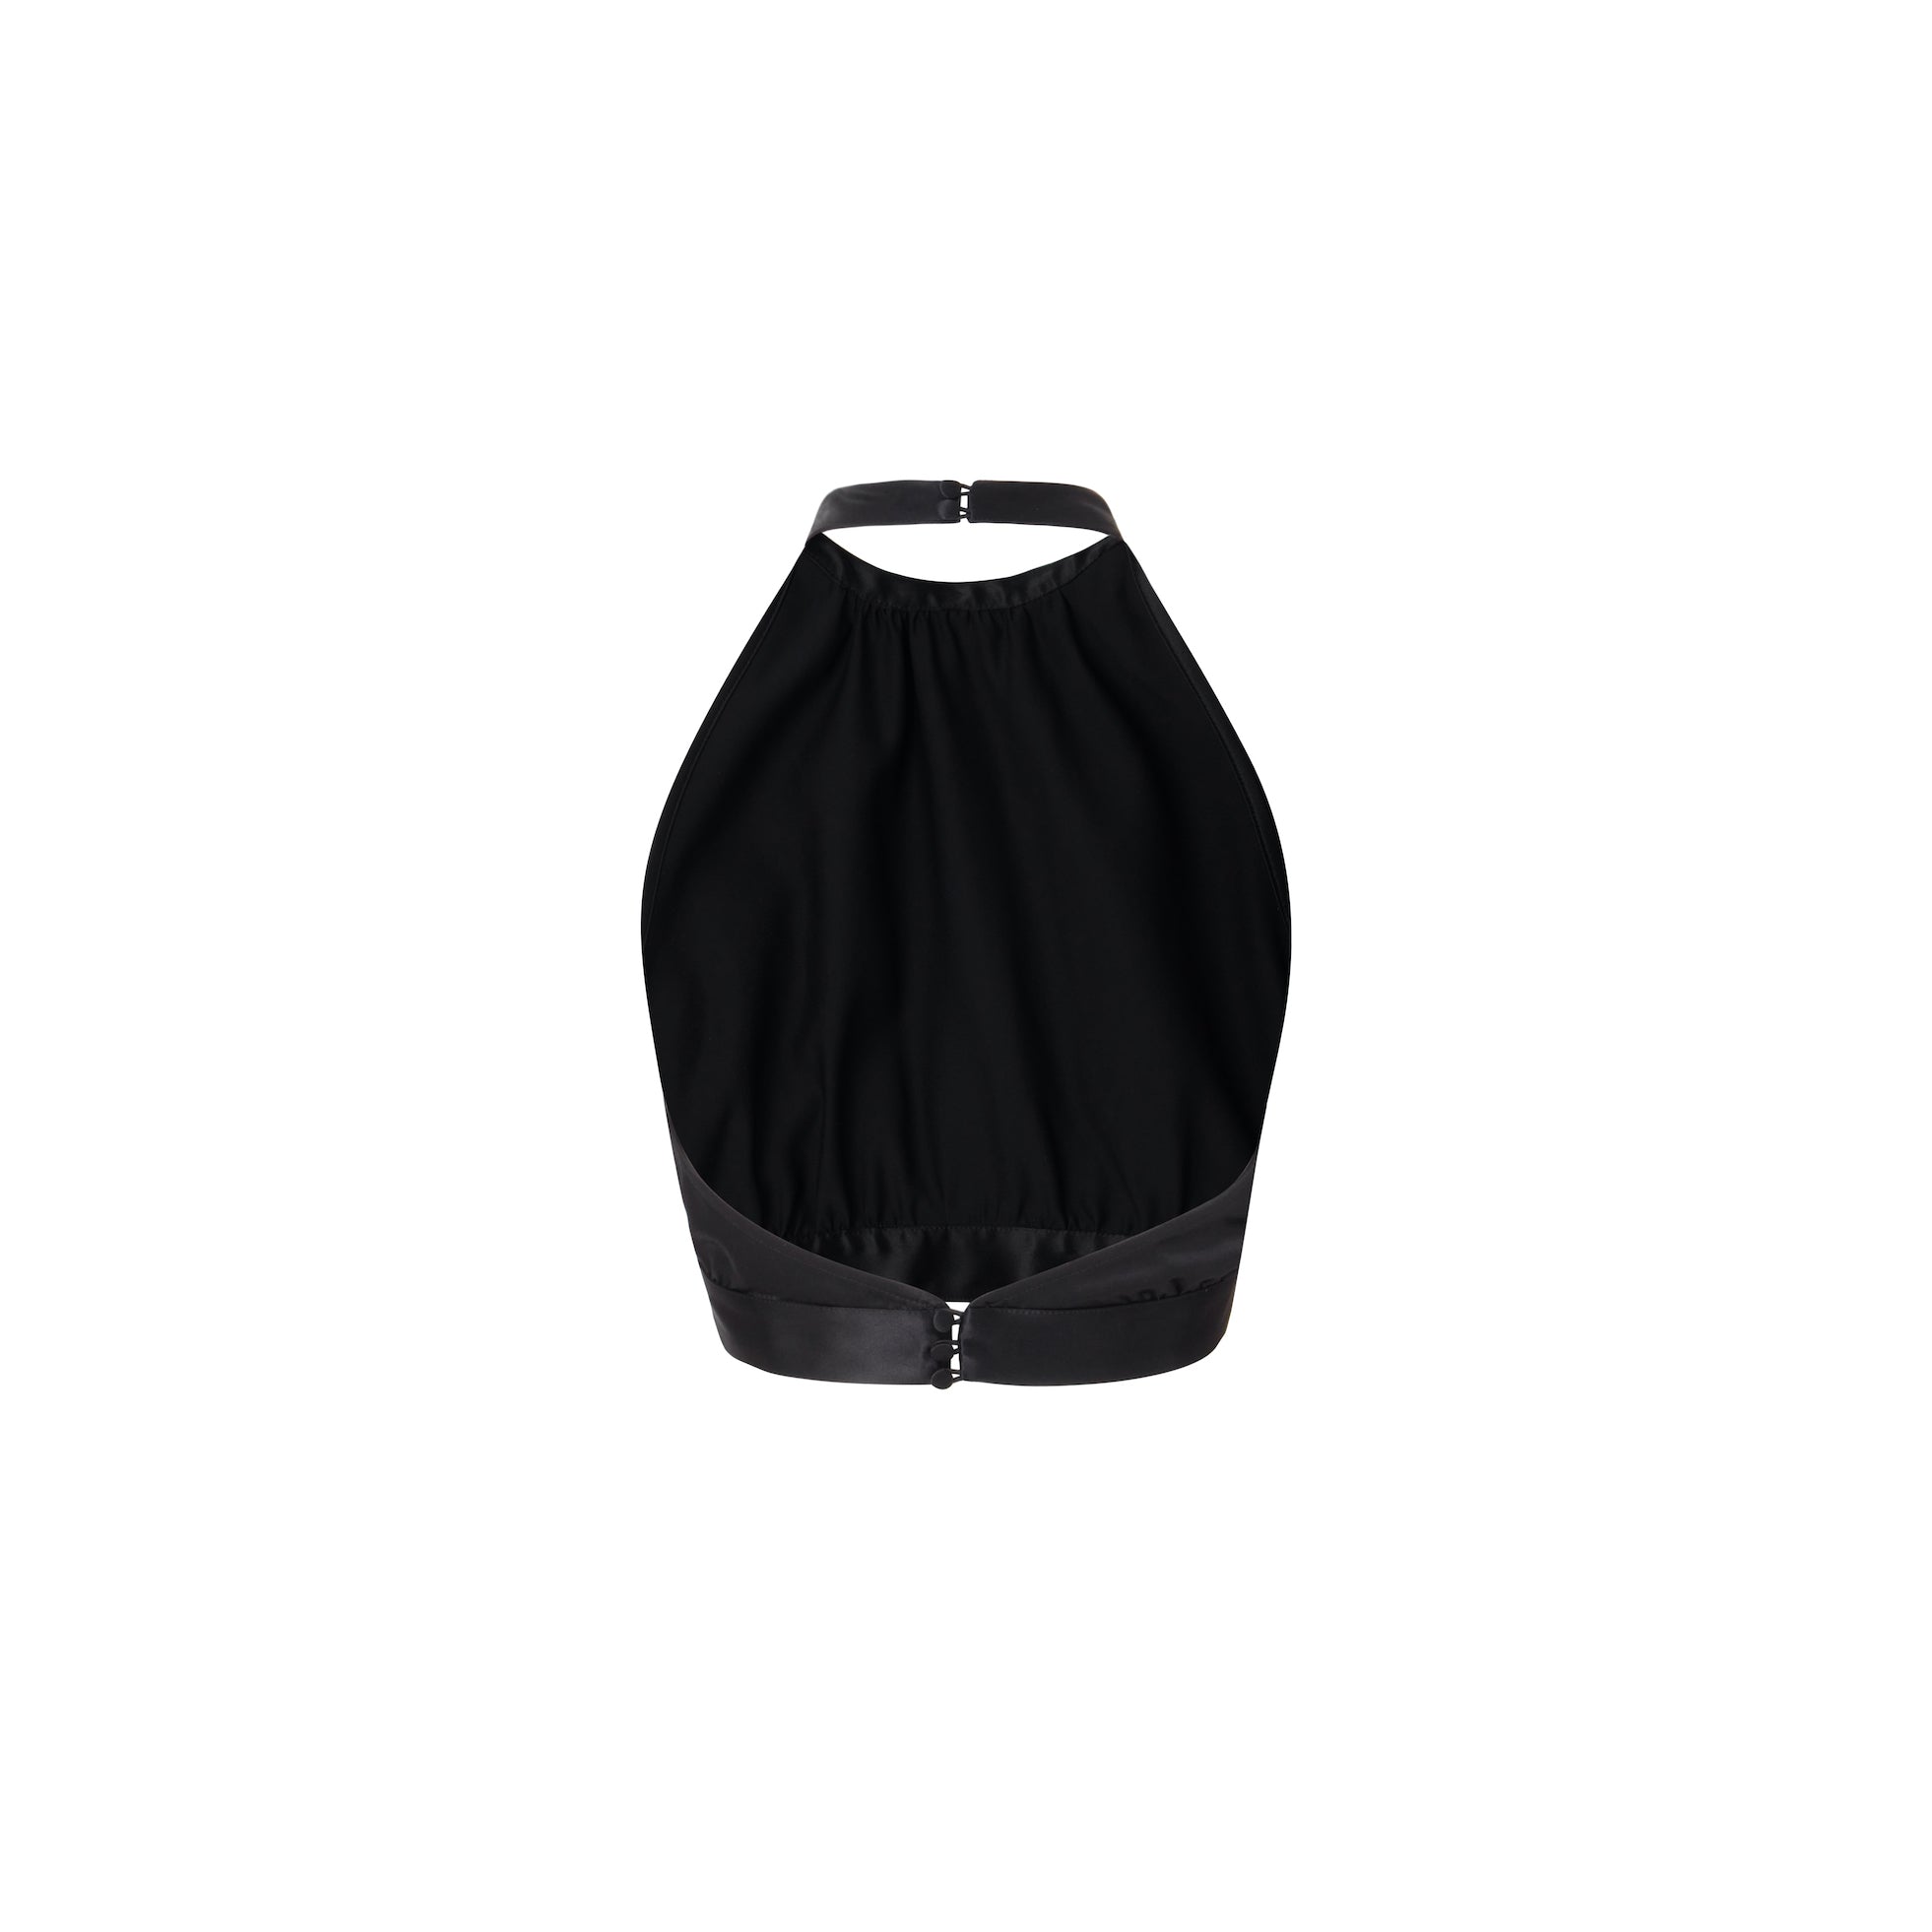 Mandibreeze resort wear festive black 100% silk skirt a-line top party rhinestone details partyset svart silkes topp halterneck